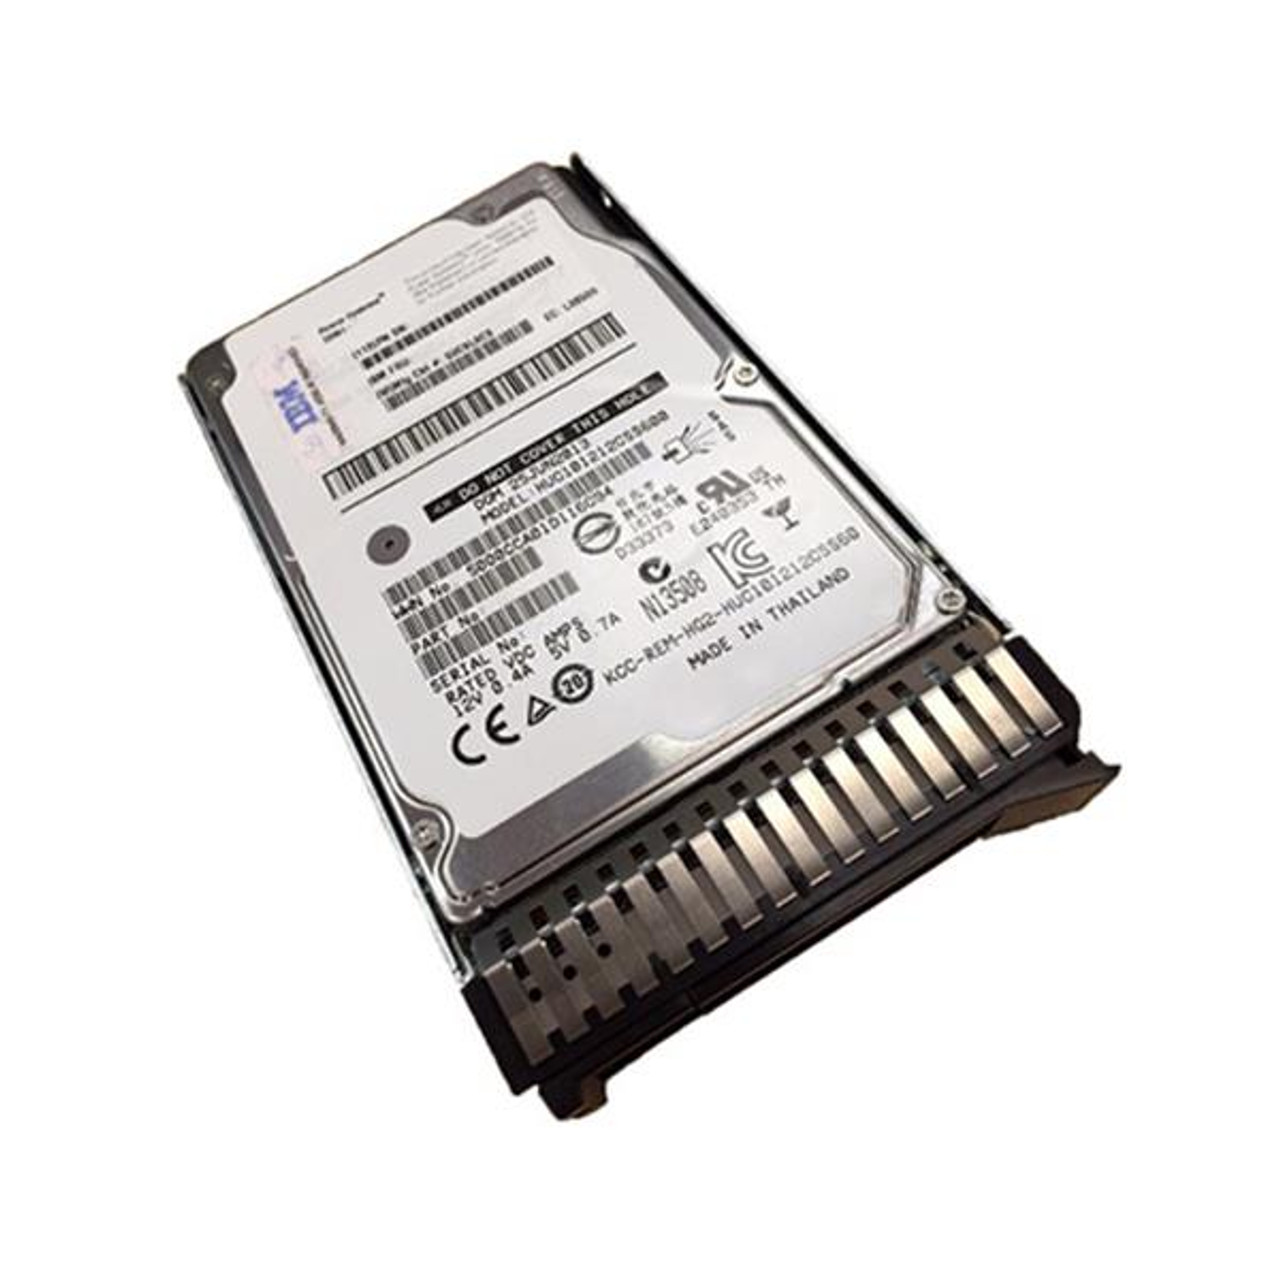 01LJ063 IBM 1.8TB 10000RPM SAS 12Gbps 3.5-inch Internal Hard Drive for FlashSystem 7200 and Storwize V7000